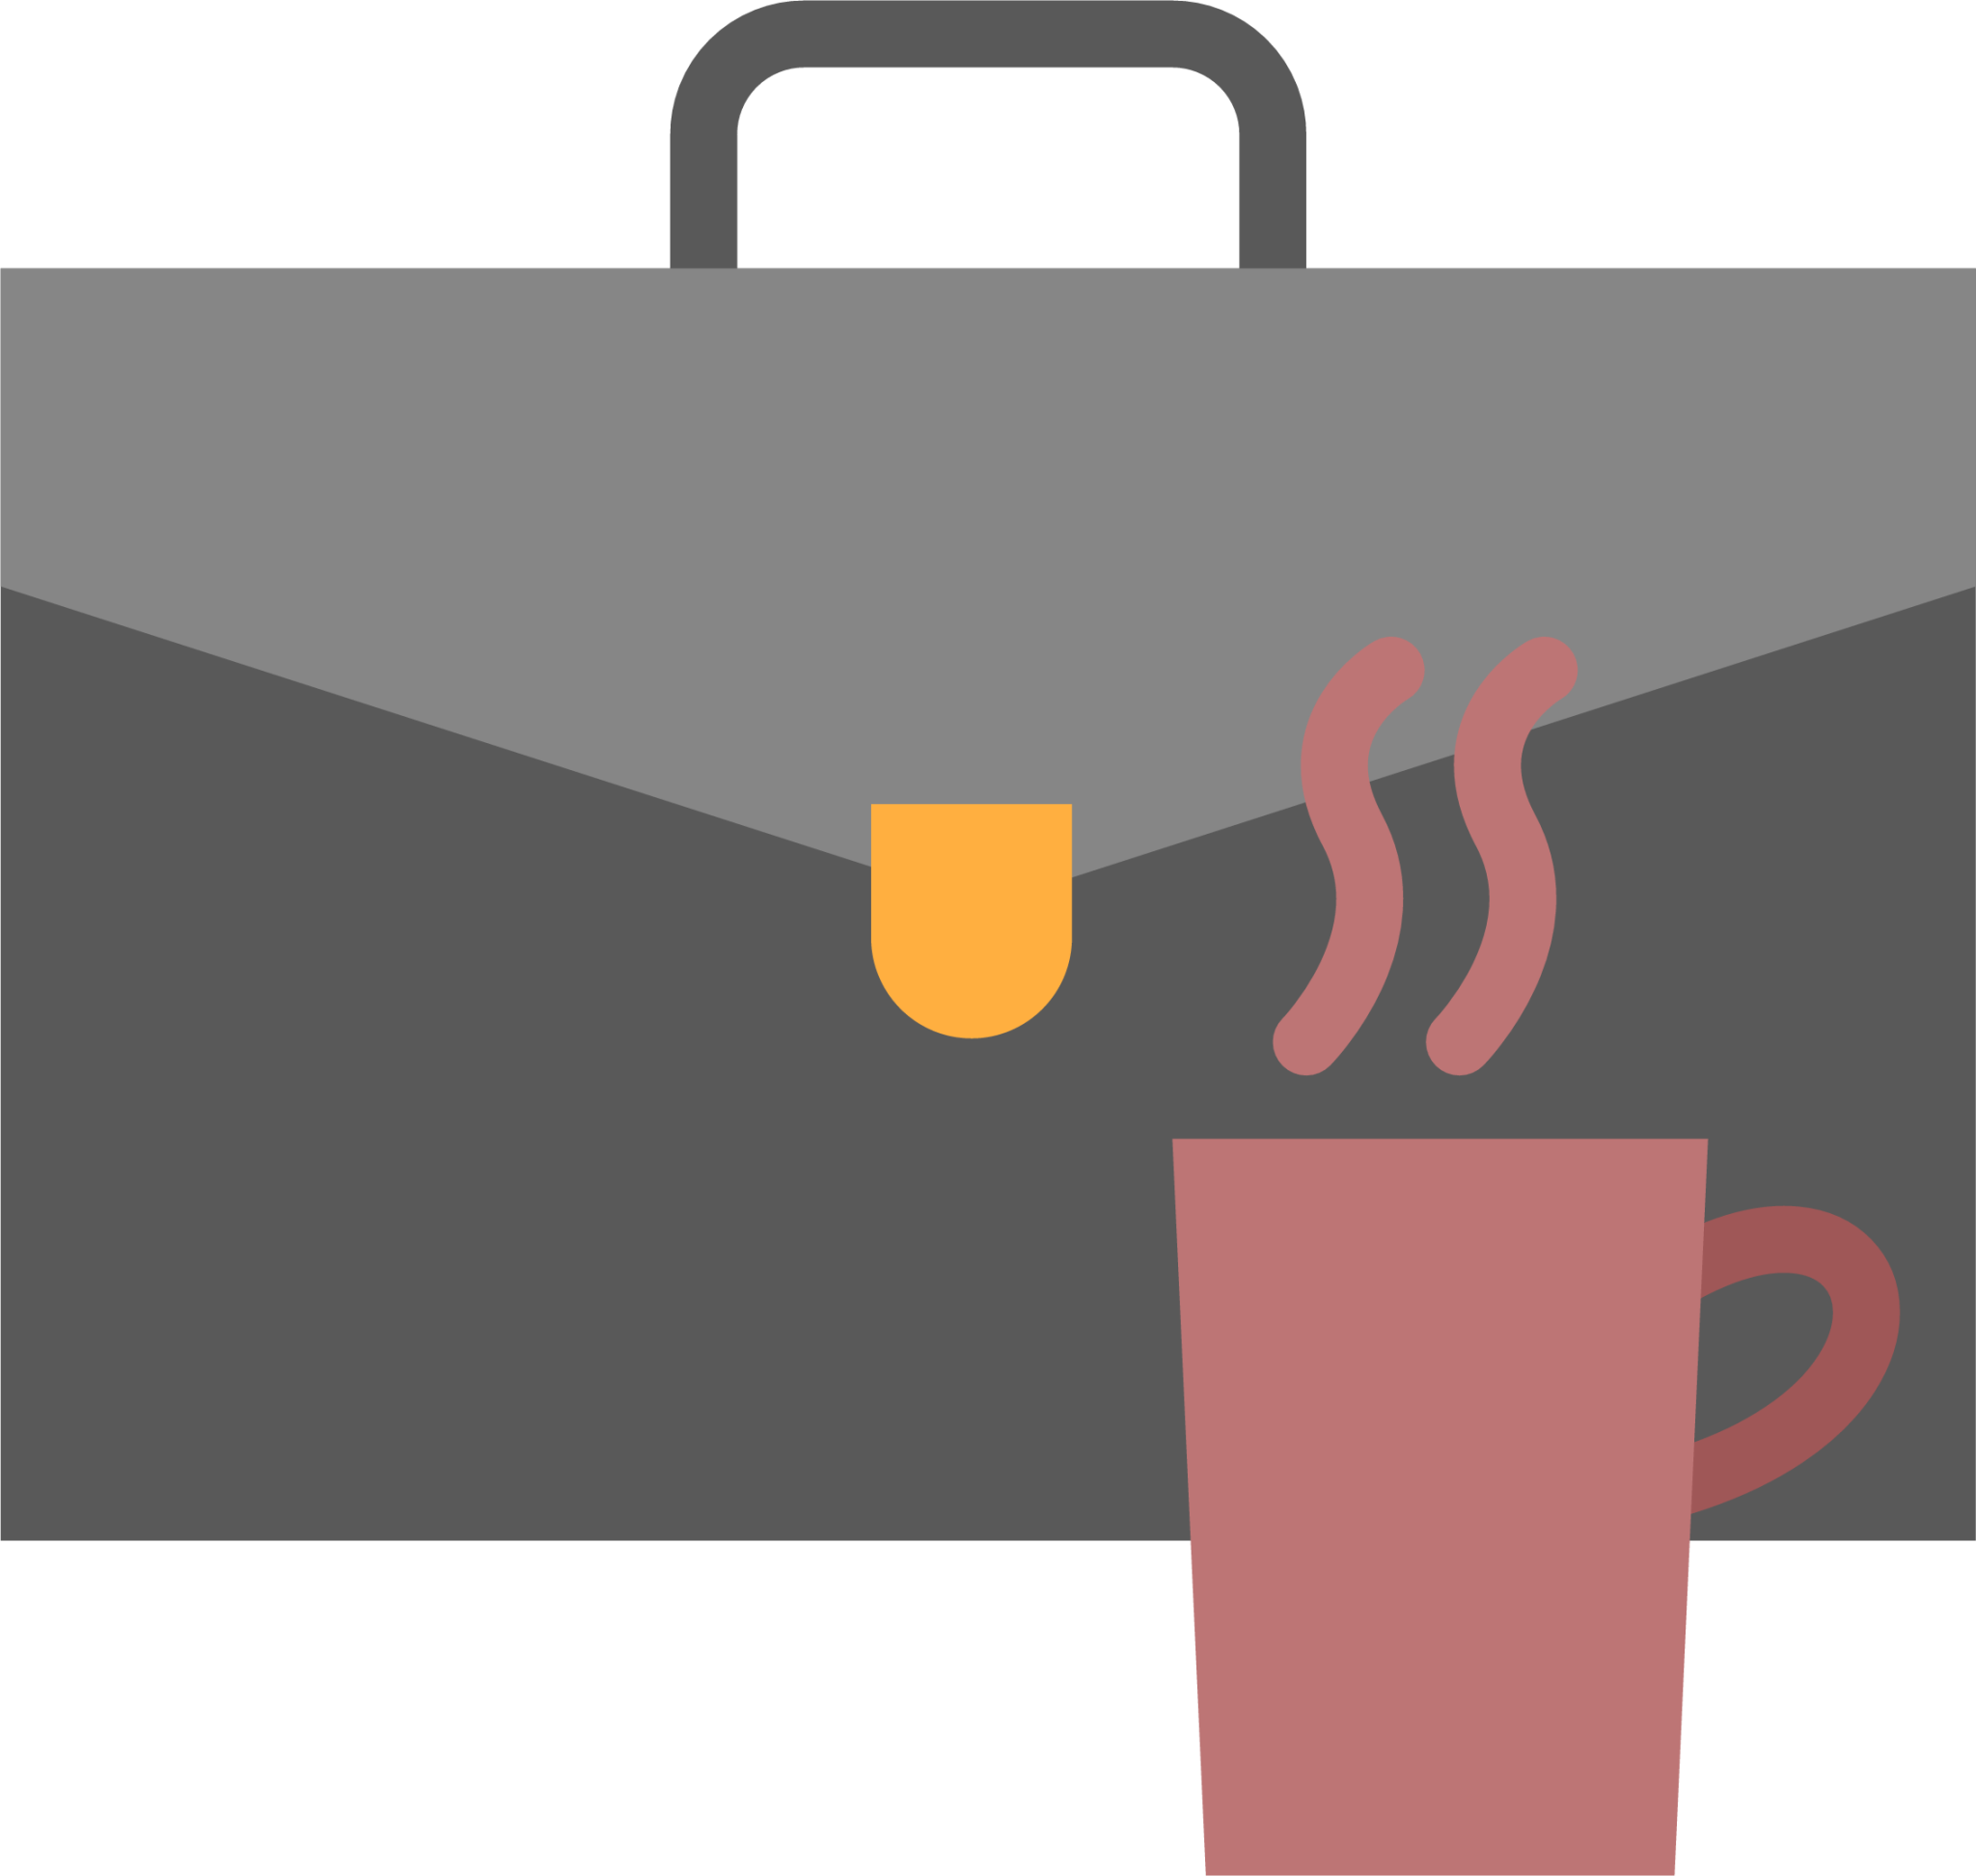 coffe bag icon